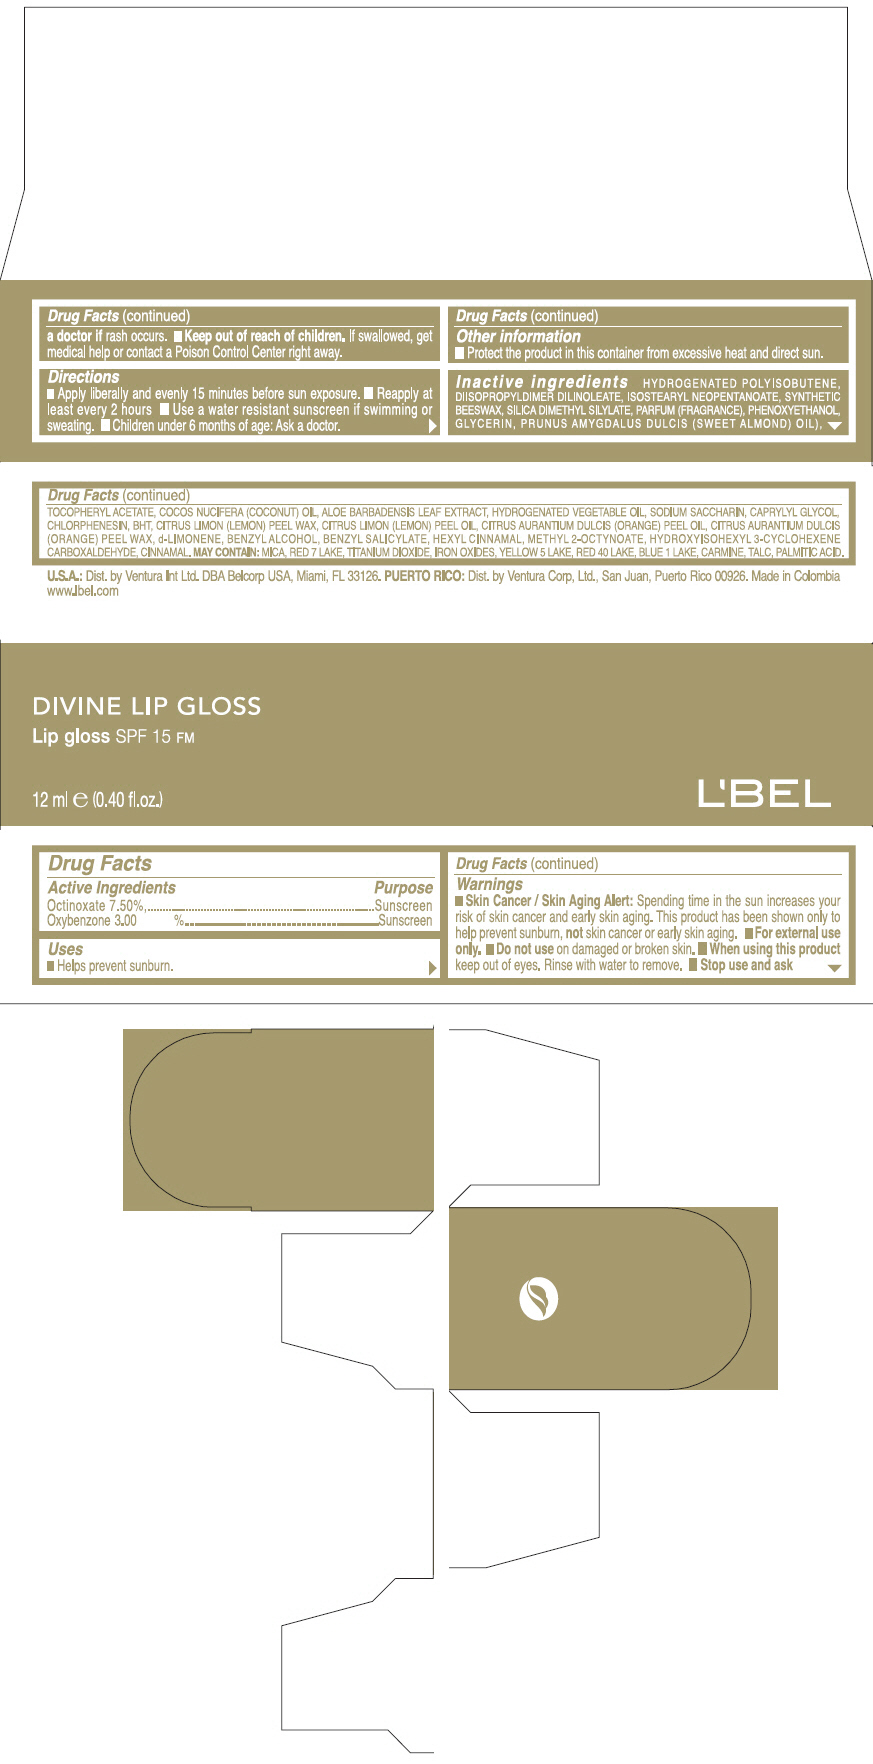 PRINCIPAL DISPLAY PANEL - 12 ml Tube Box - PECHE - BROWN